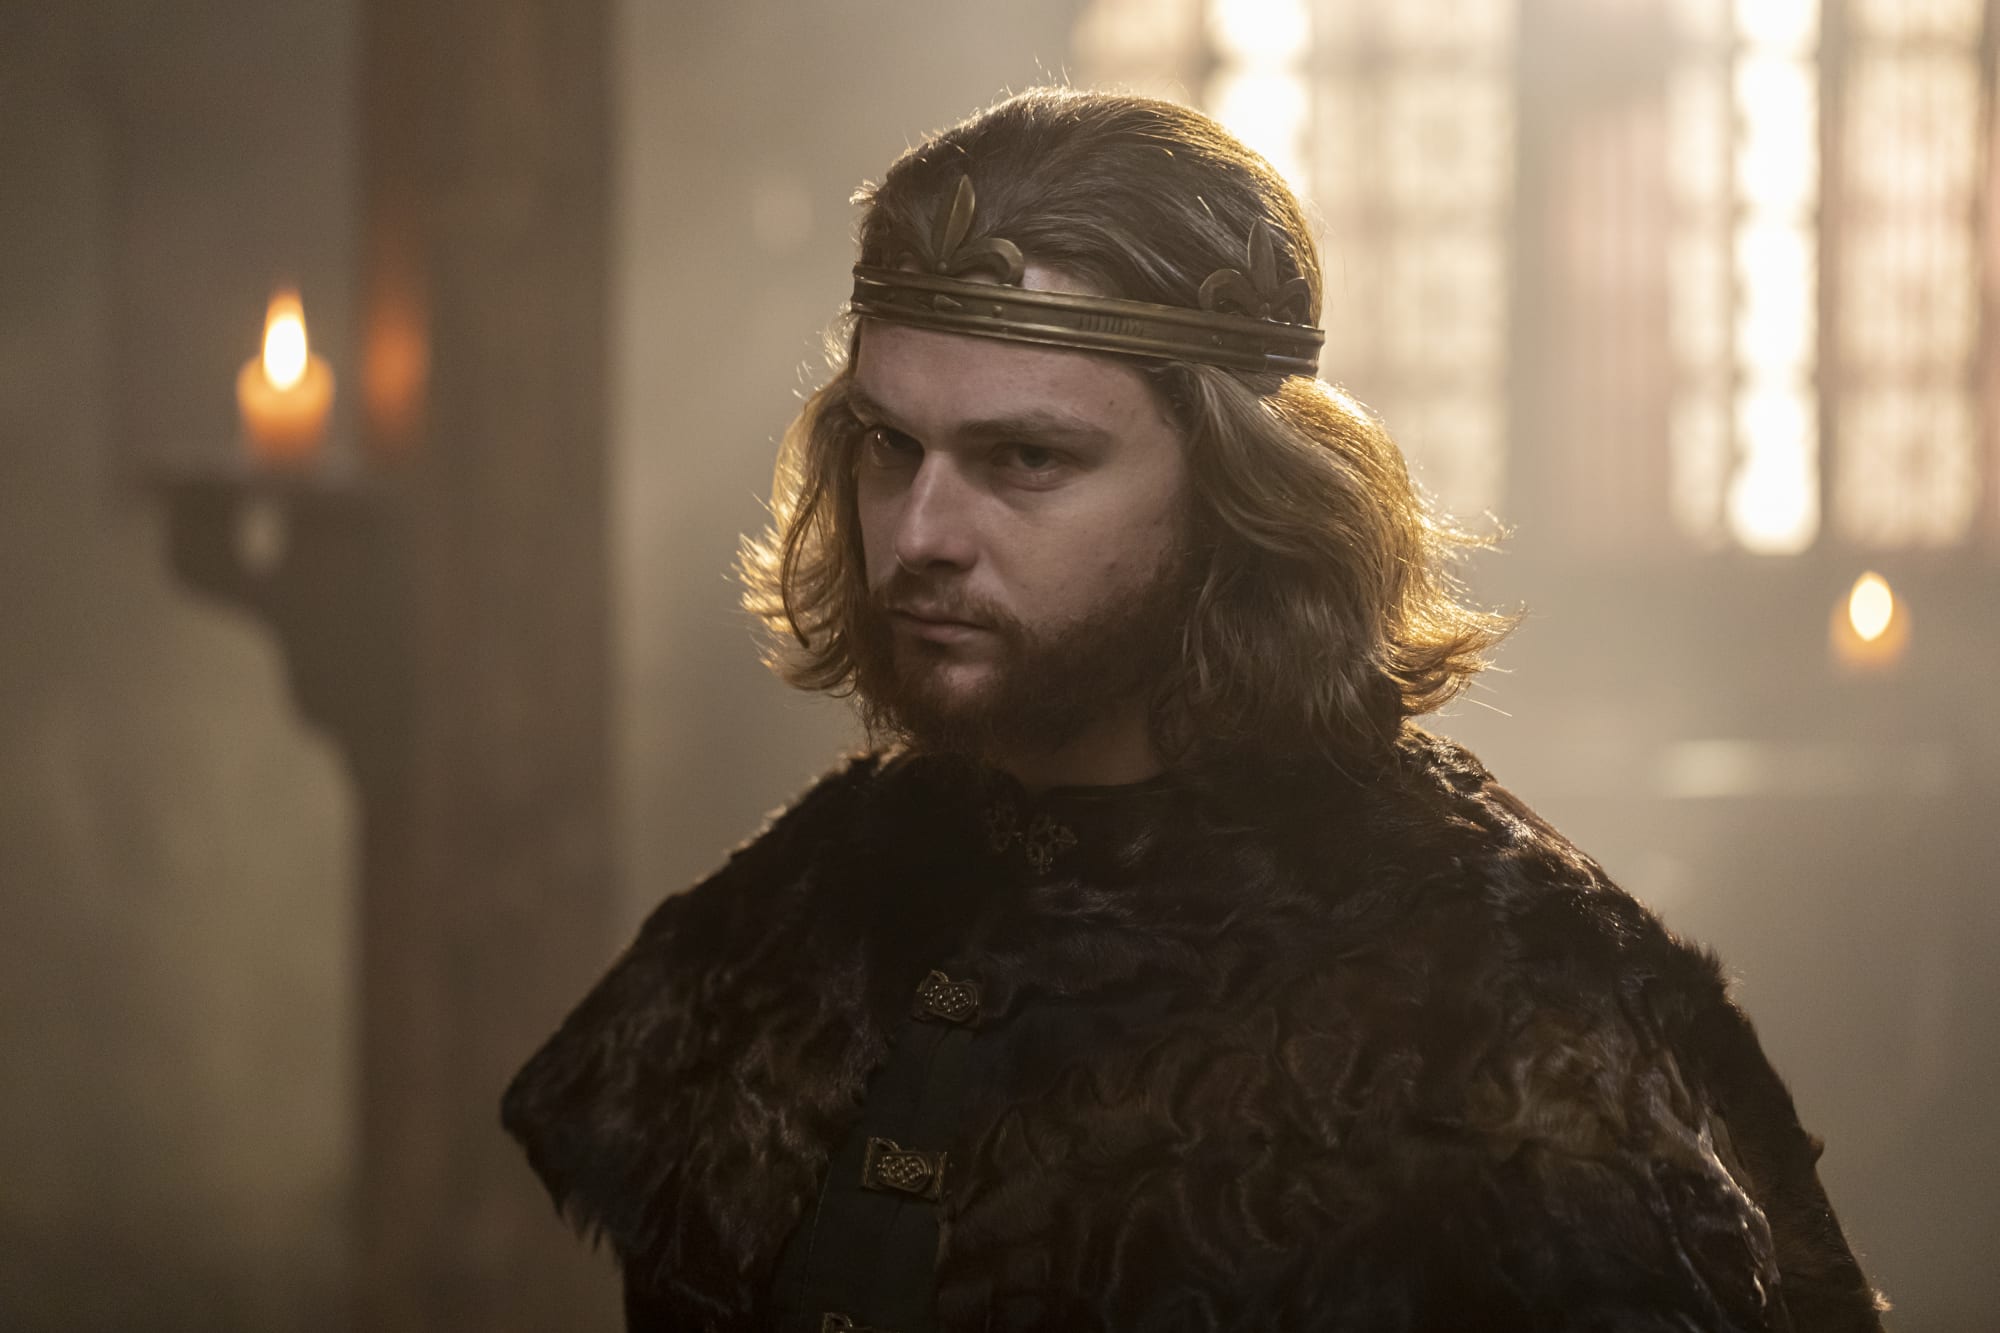 The Last Kingdom star King Edward actor didn't want to do key scene